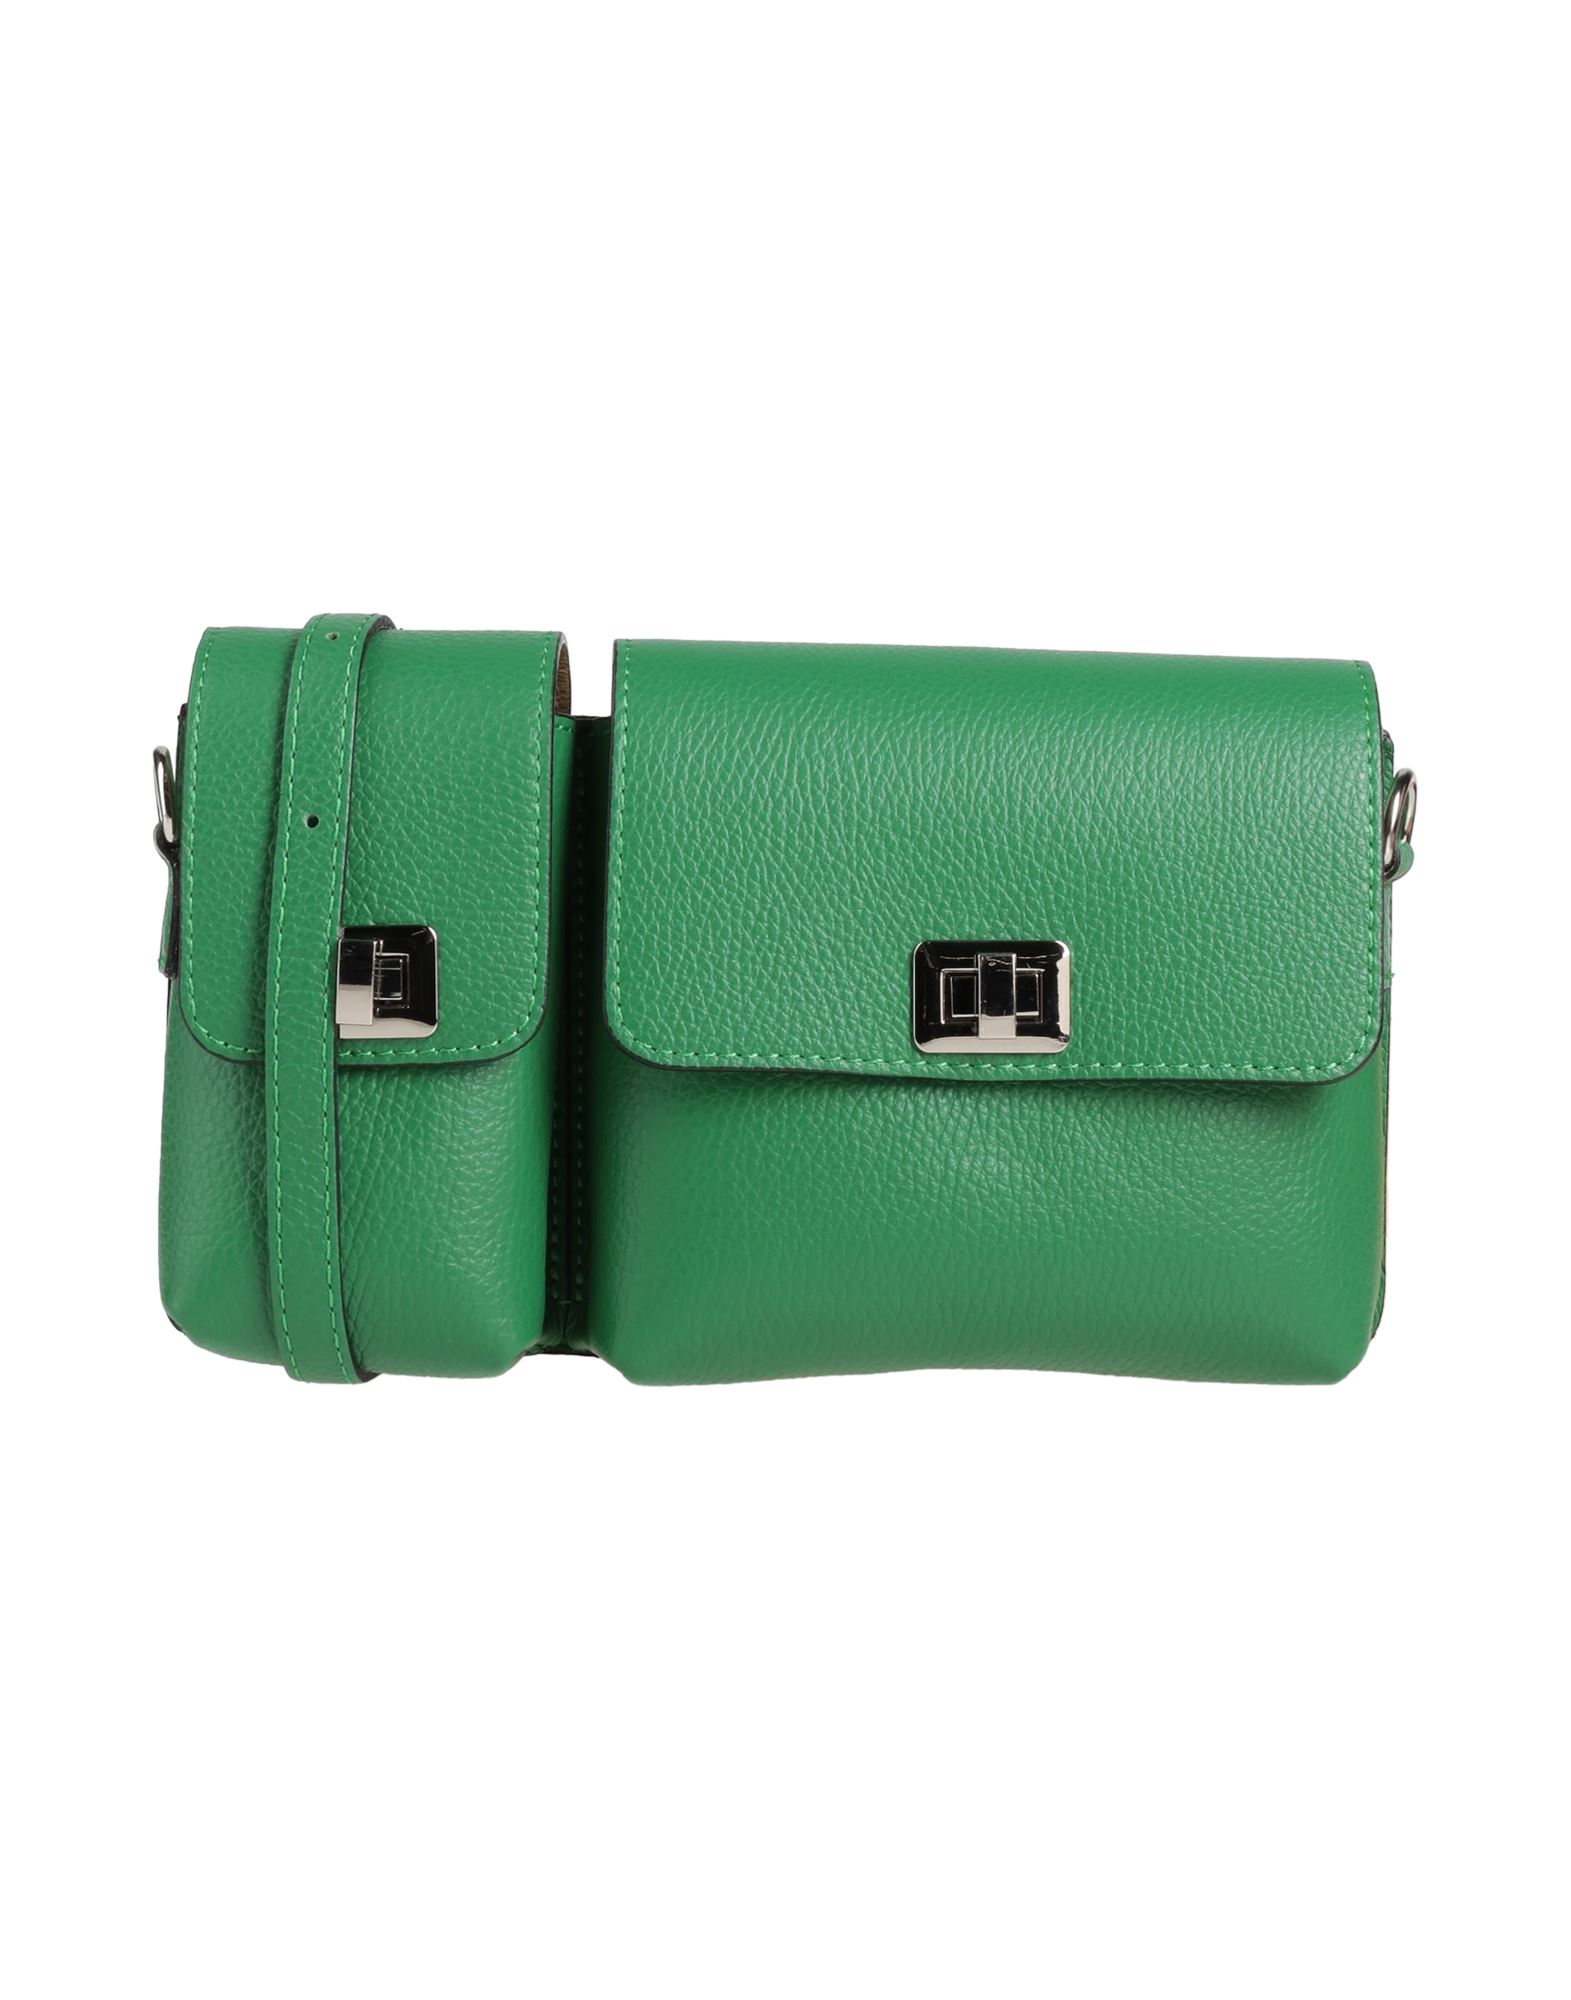 Ab Asia Bellucci Handbags In Green